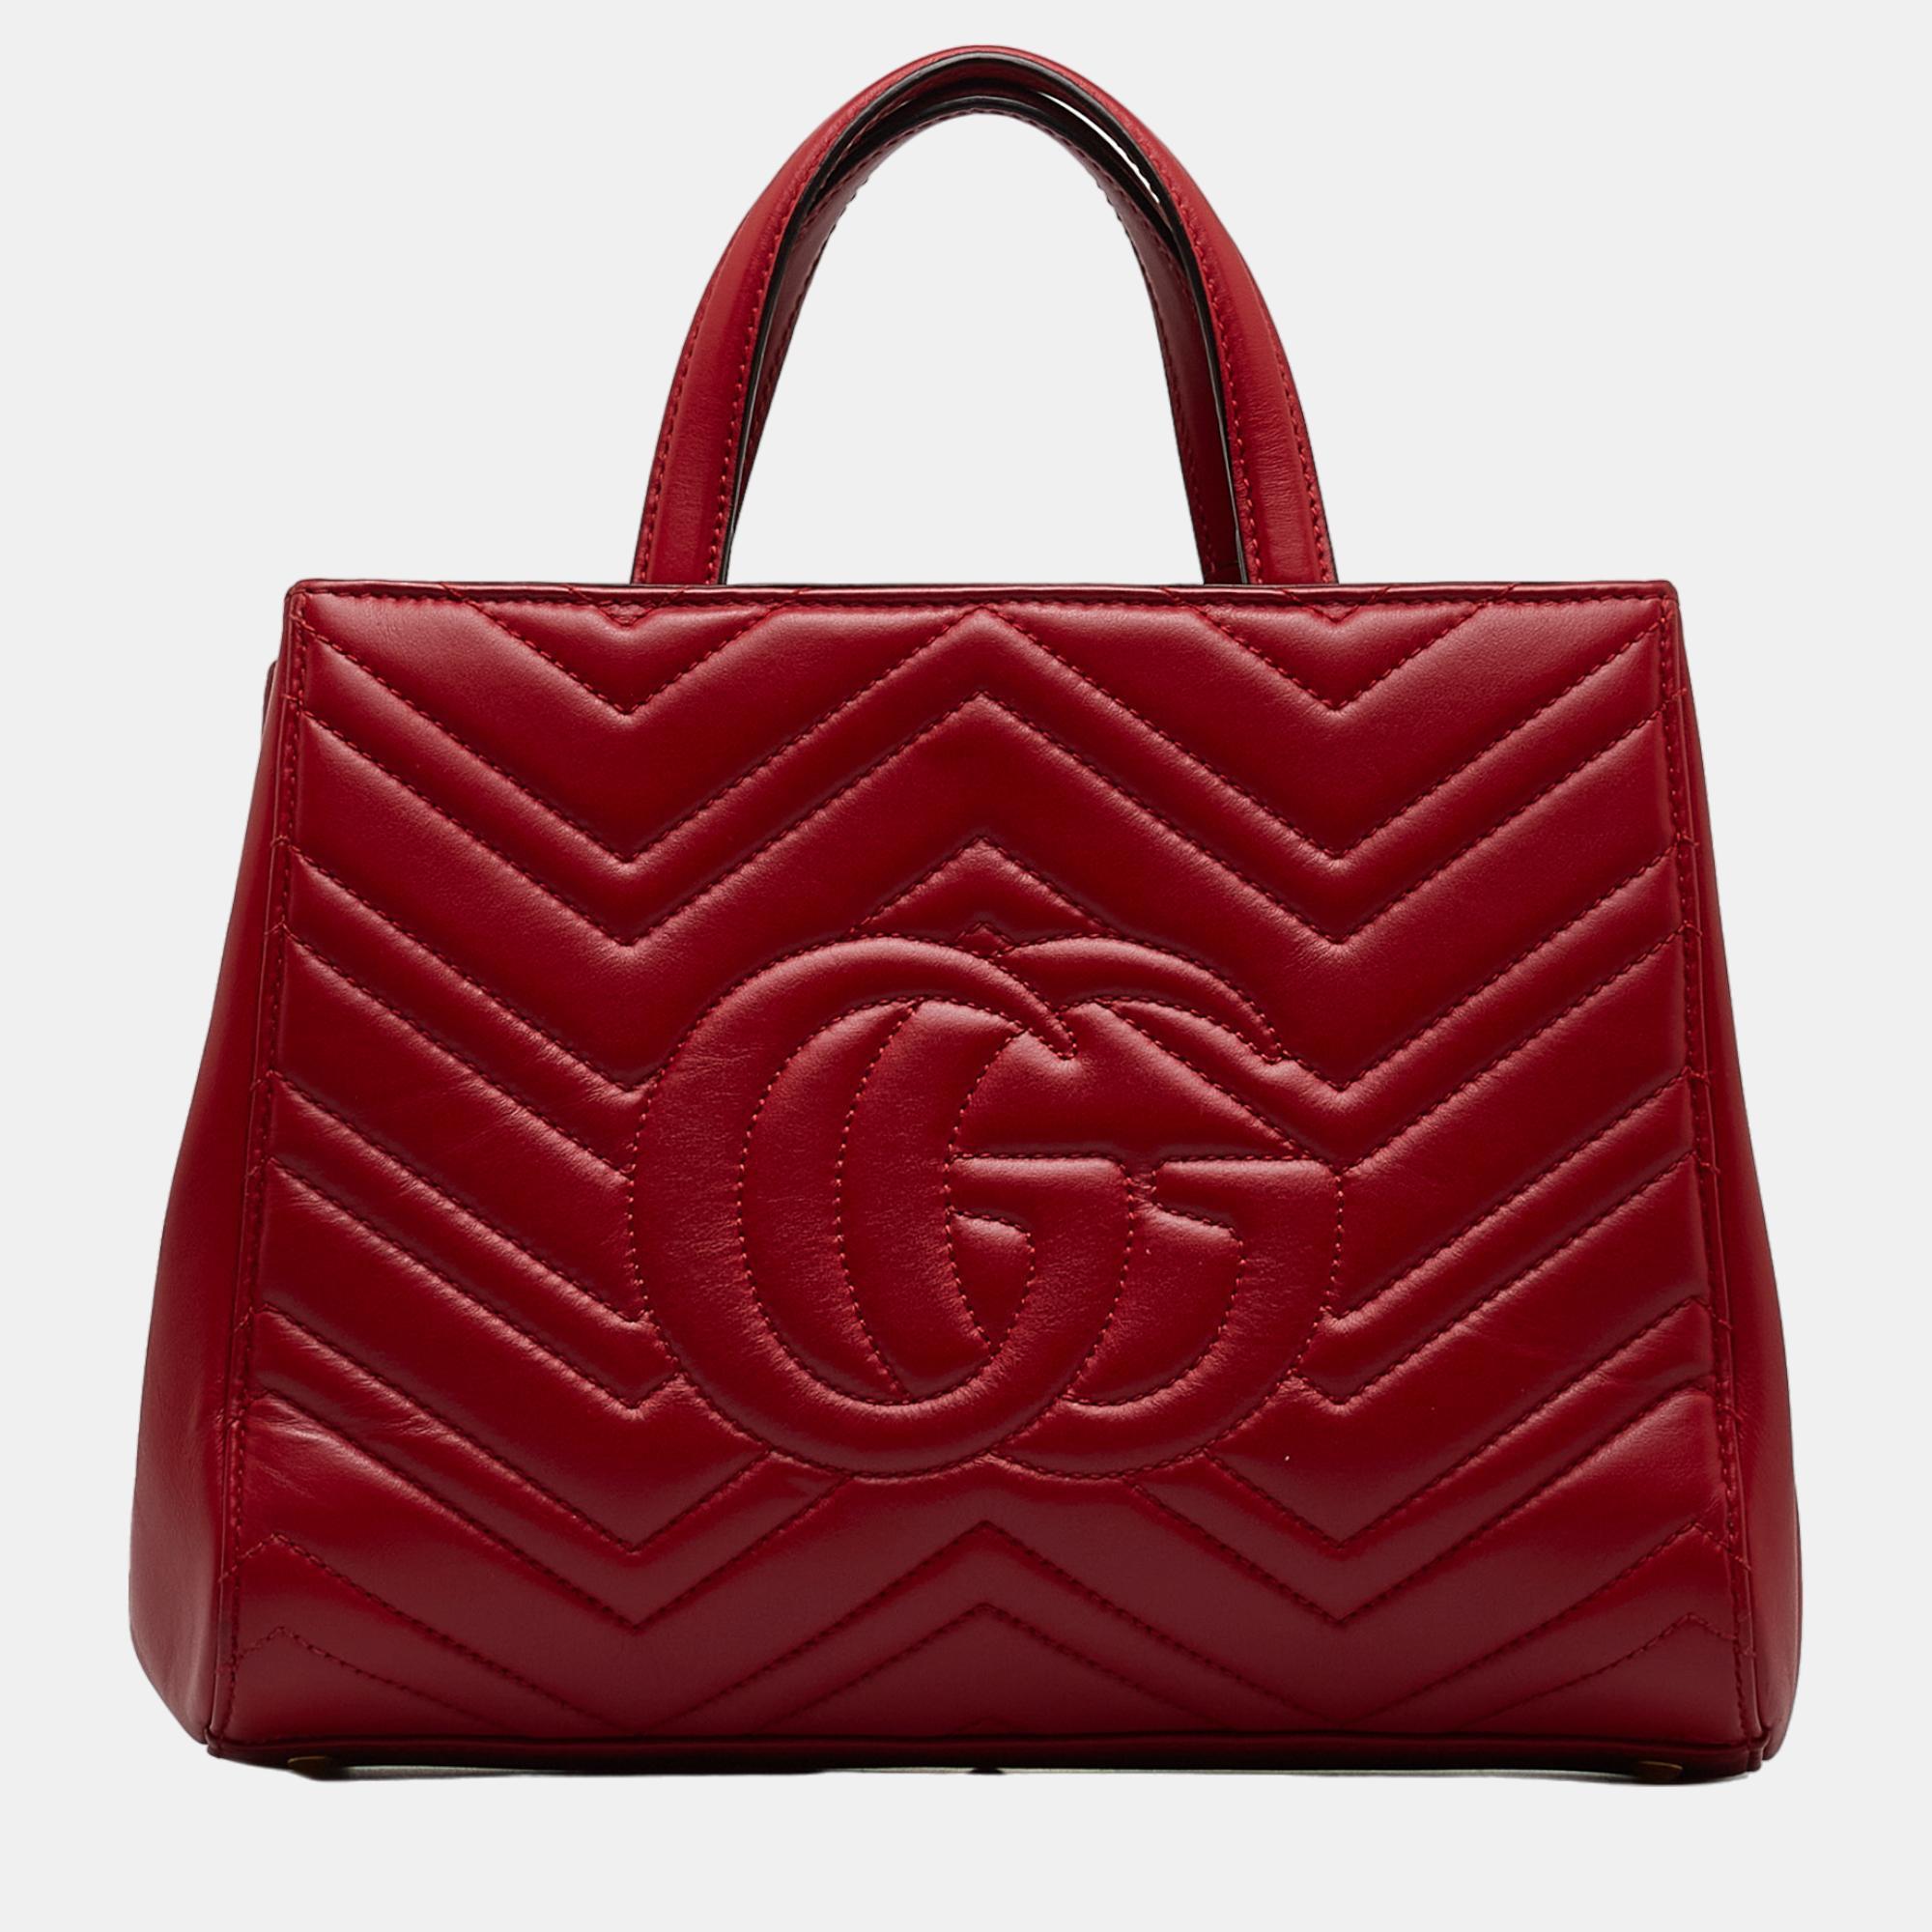 Gucci Red Medium GG Marmont Matelasse Satchel